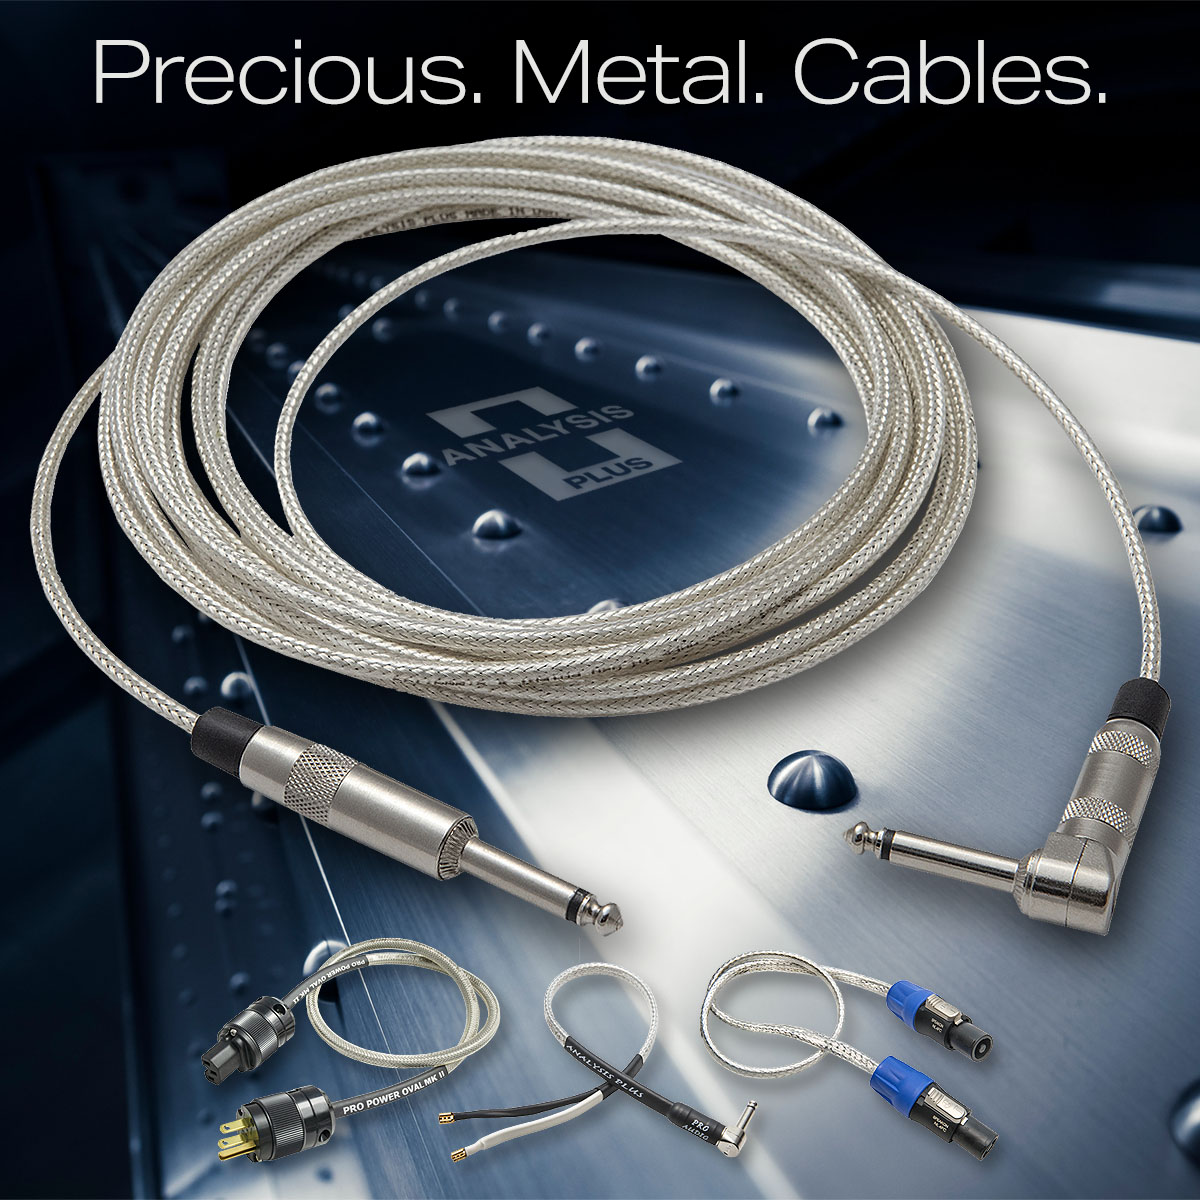 Precious Metal Cables